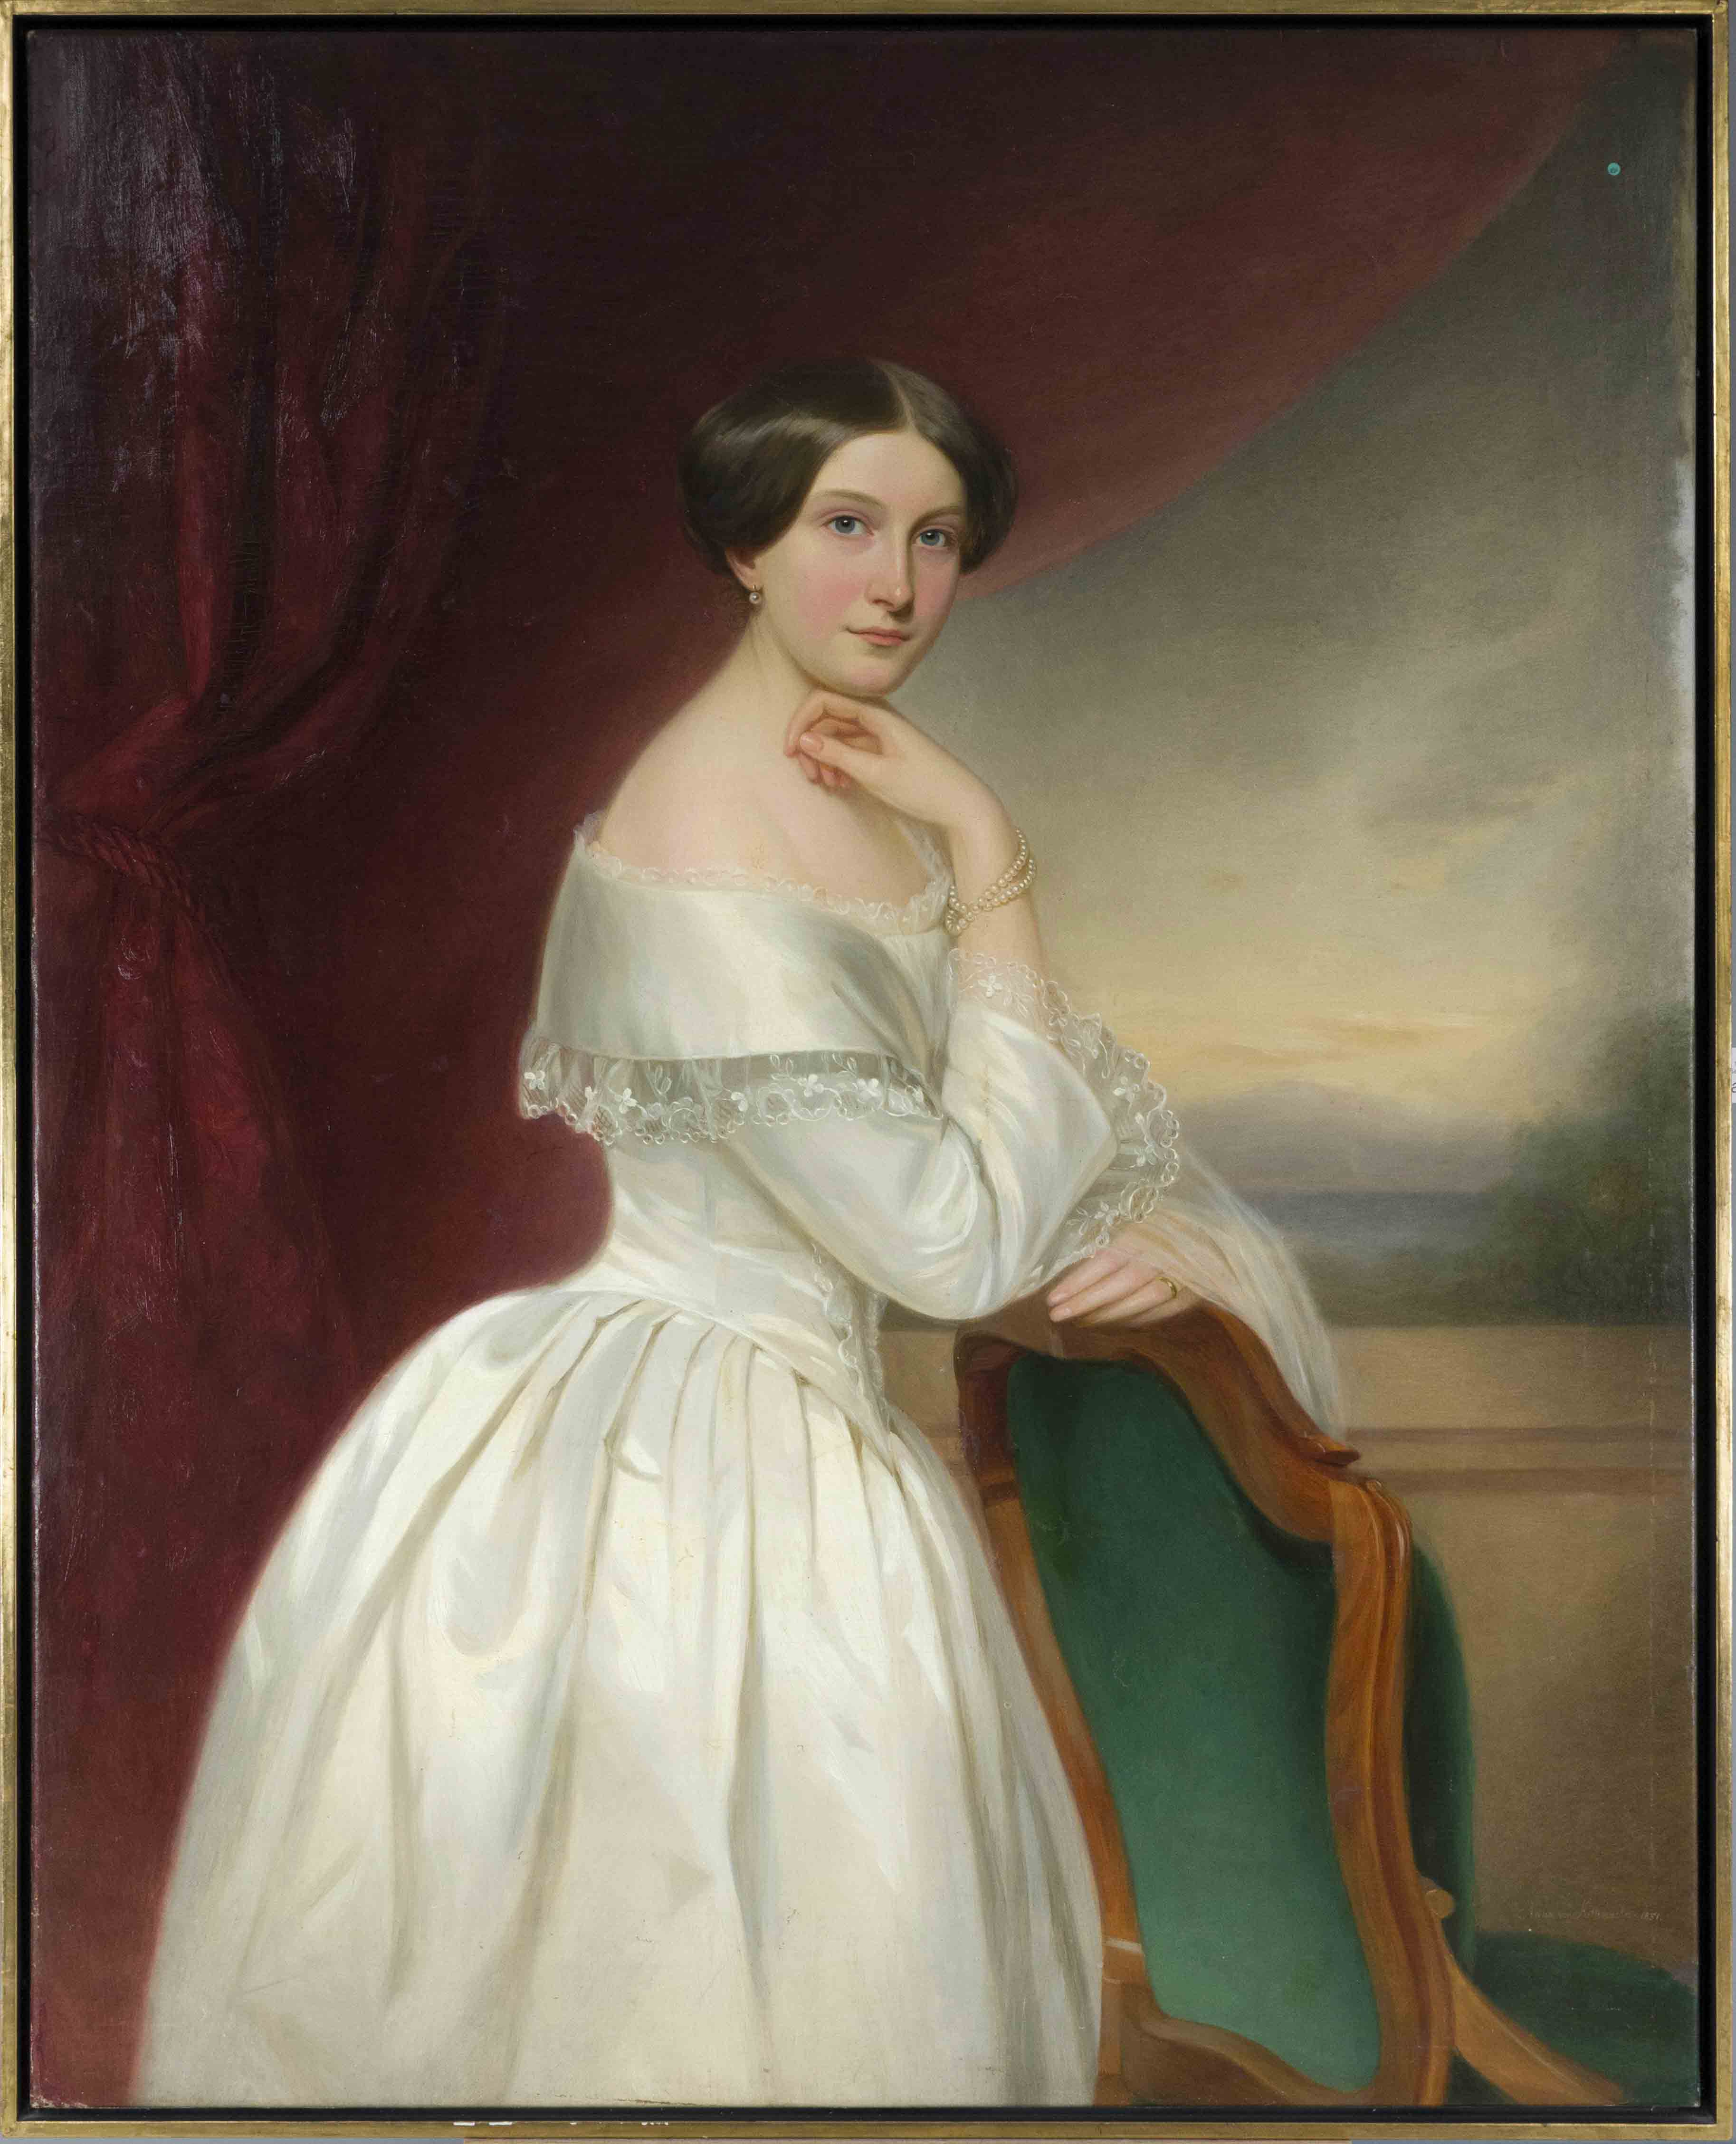 Anna von Kettenacker, portrait painter, mid-19th century, representative portrait of a lady in front